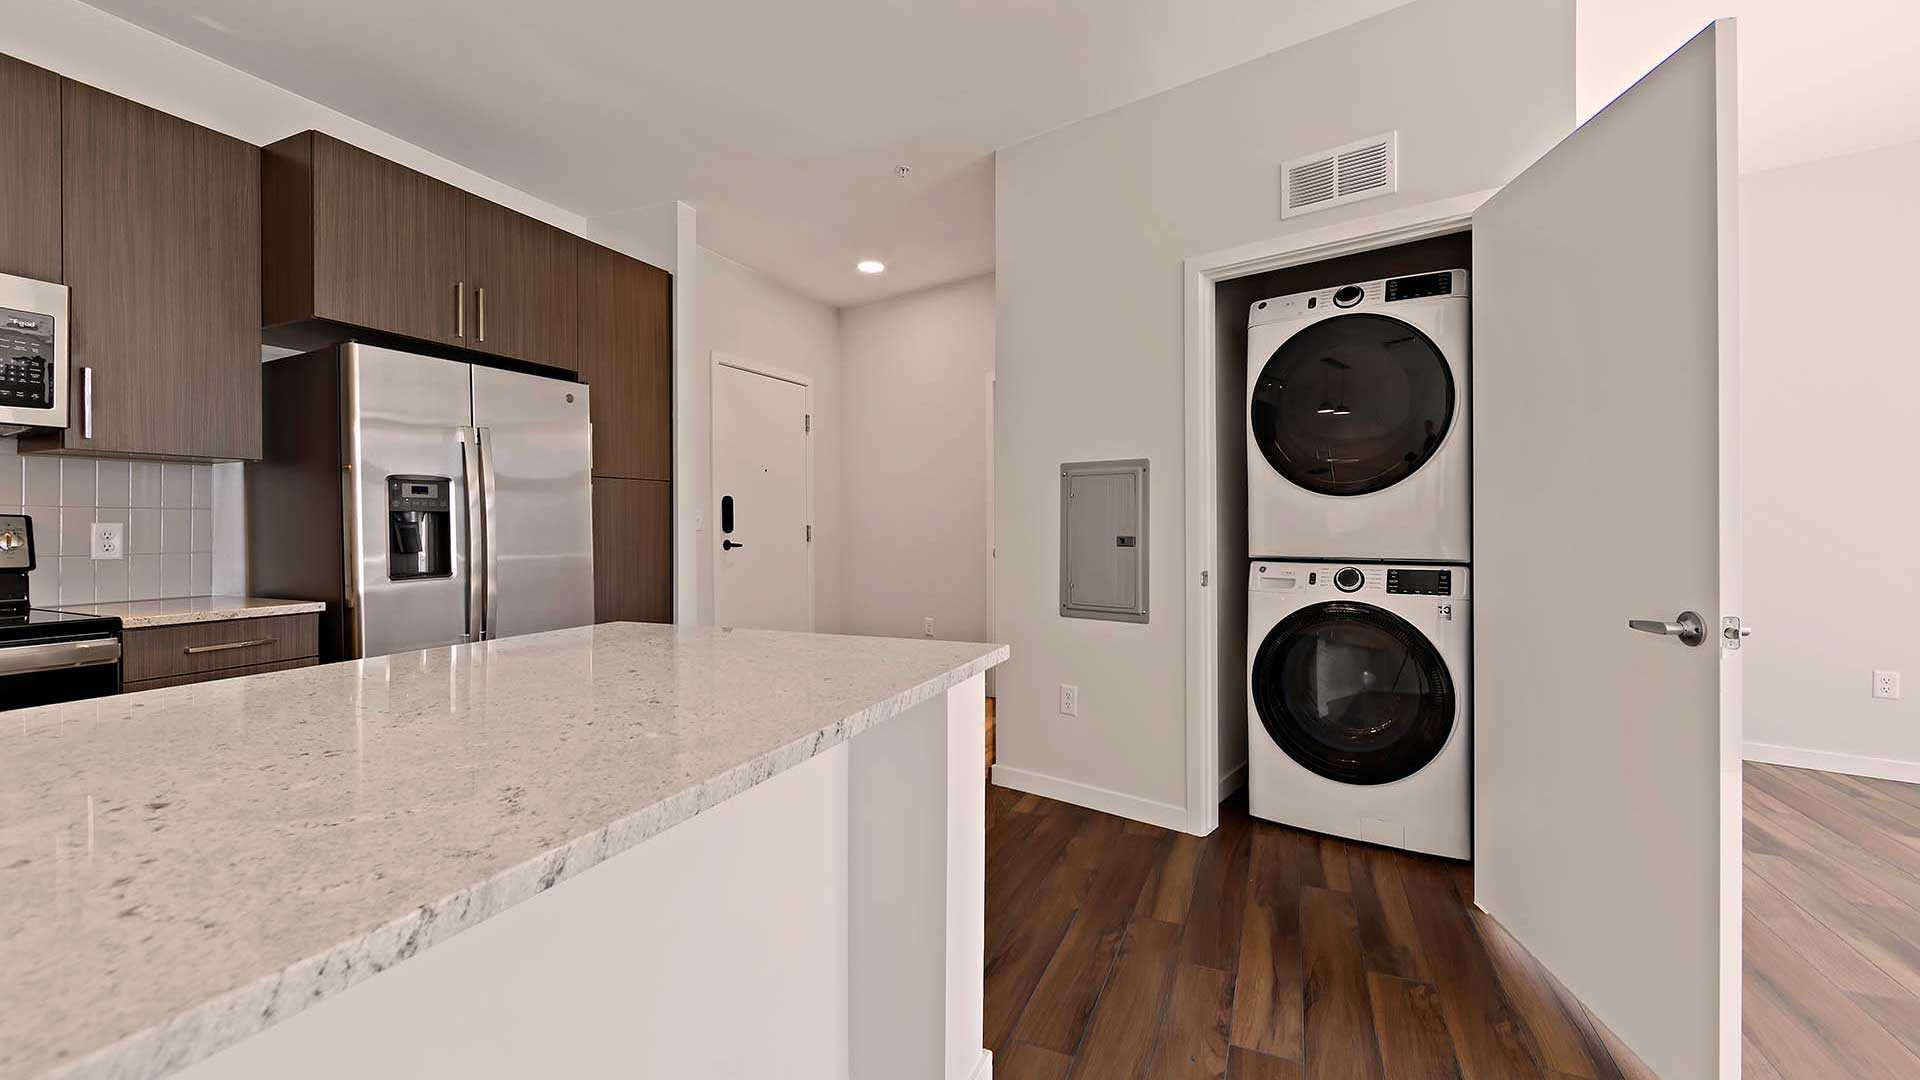 Reve apartments s3 kitchen laundry warm decor view